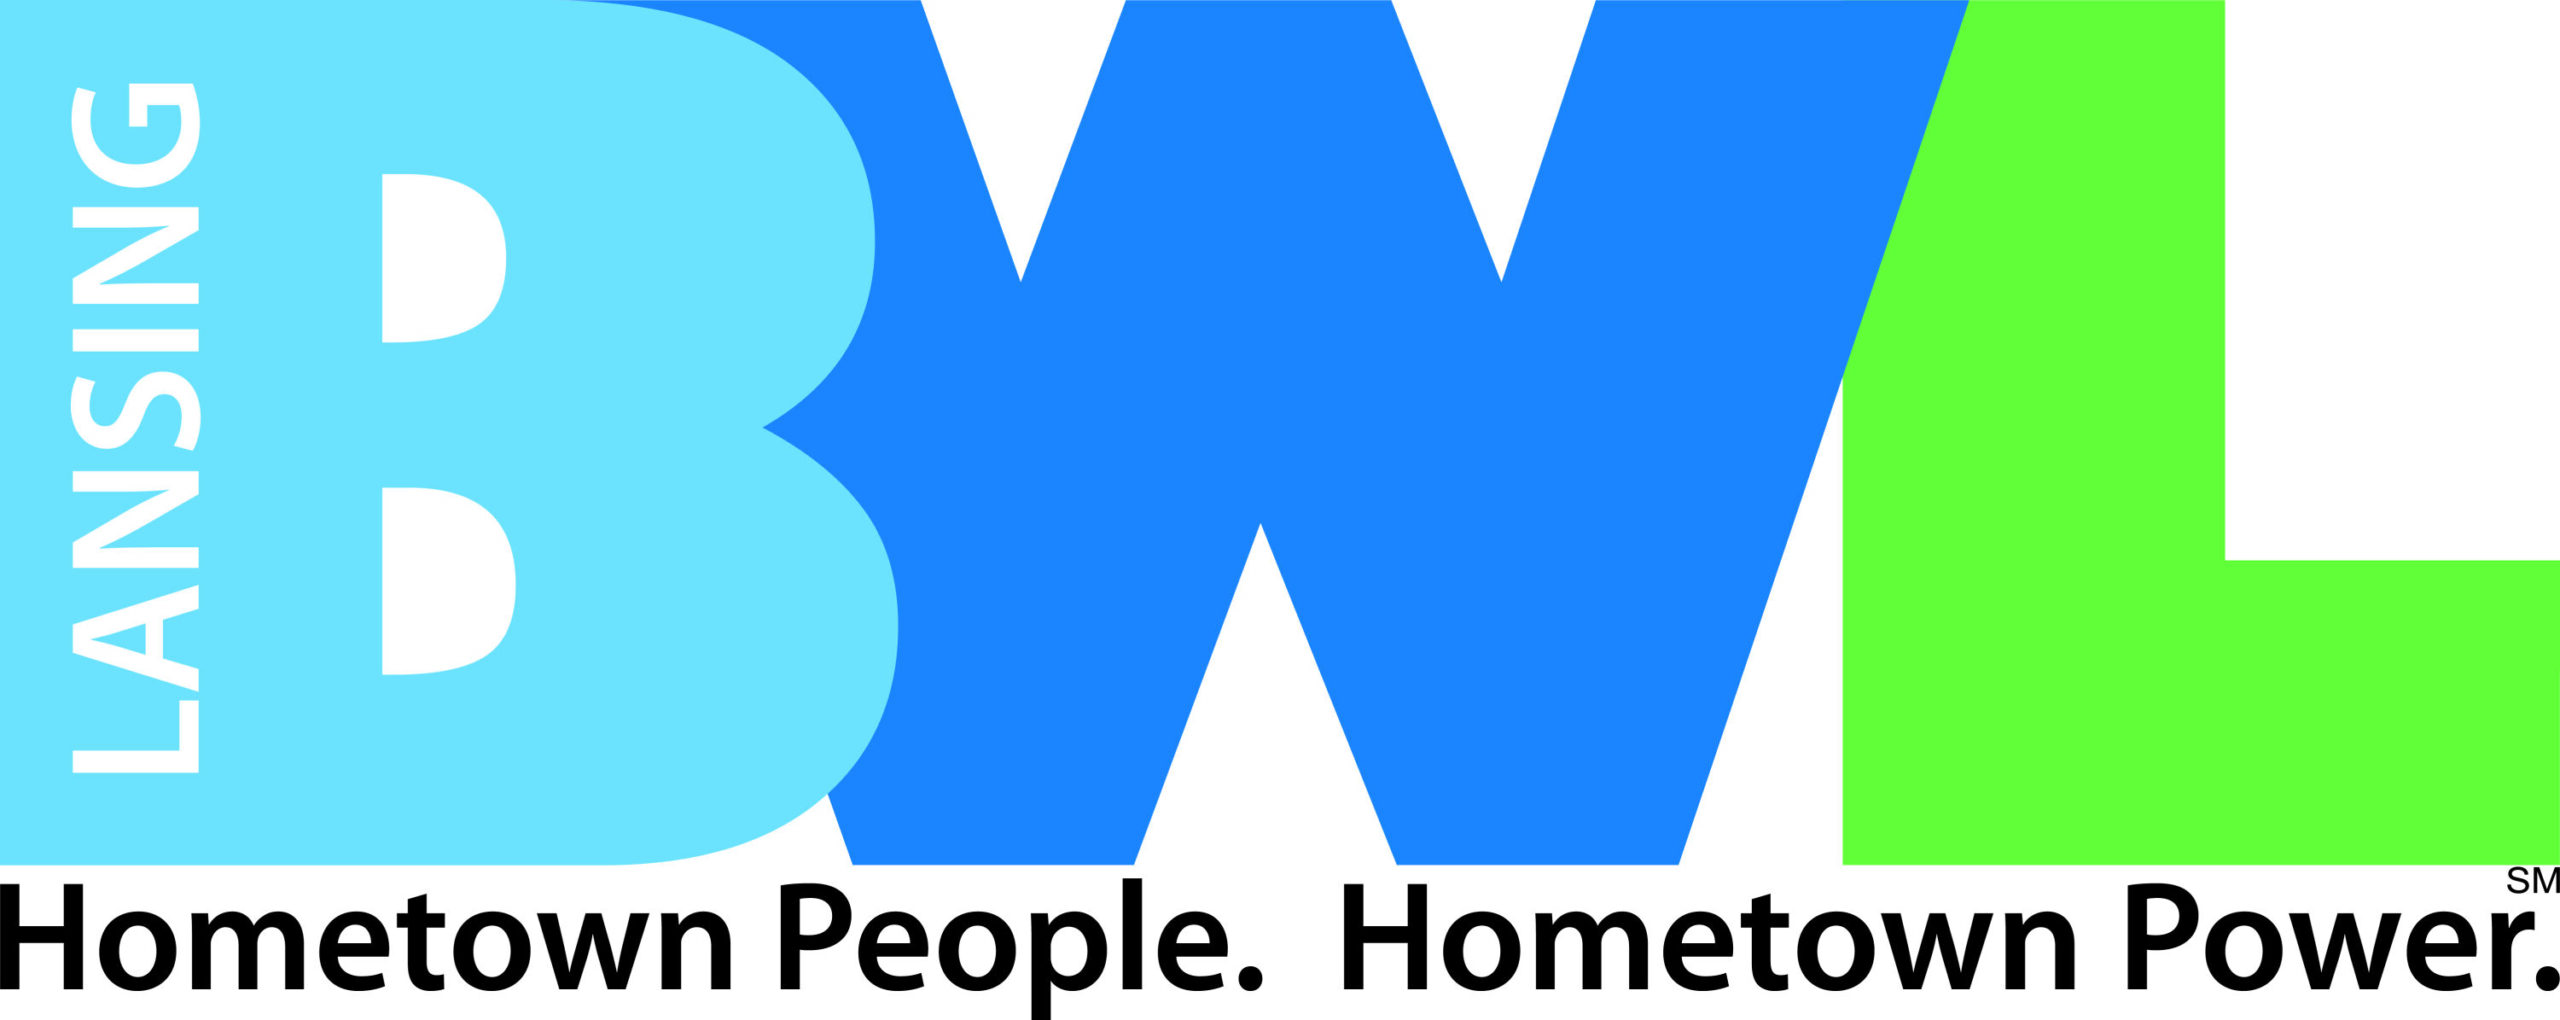 BWL Corporate Logo